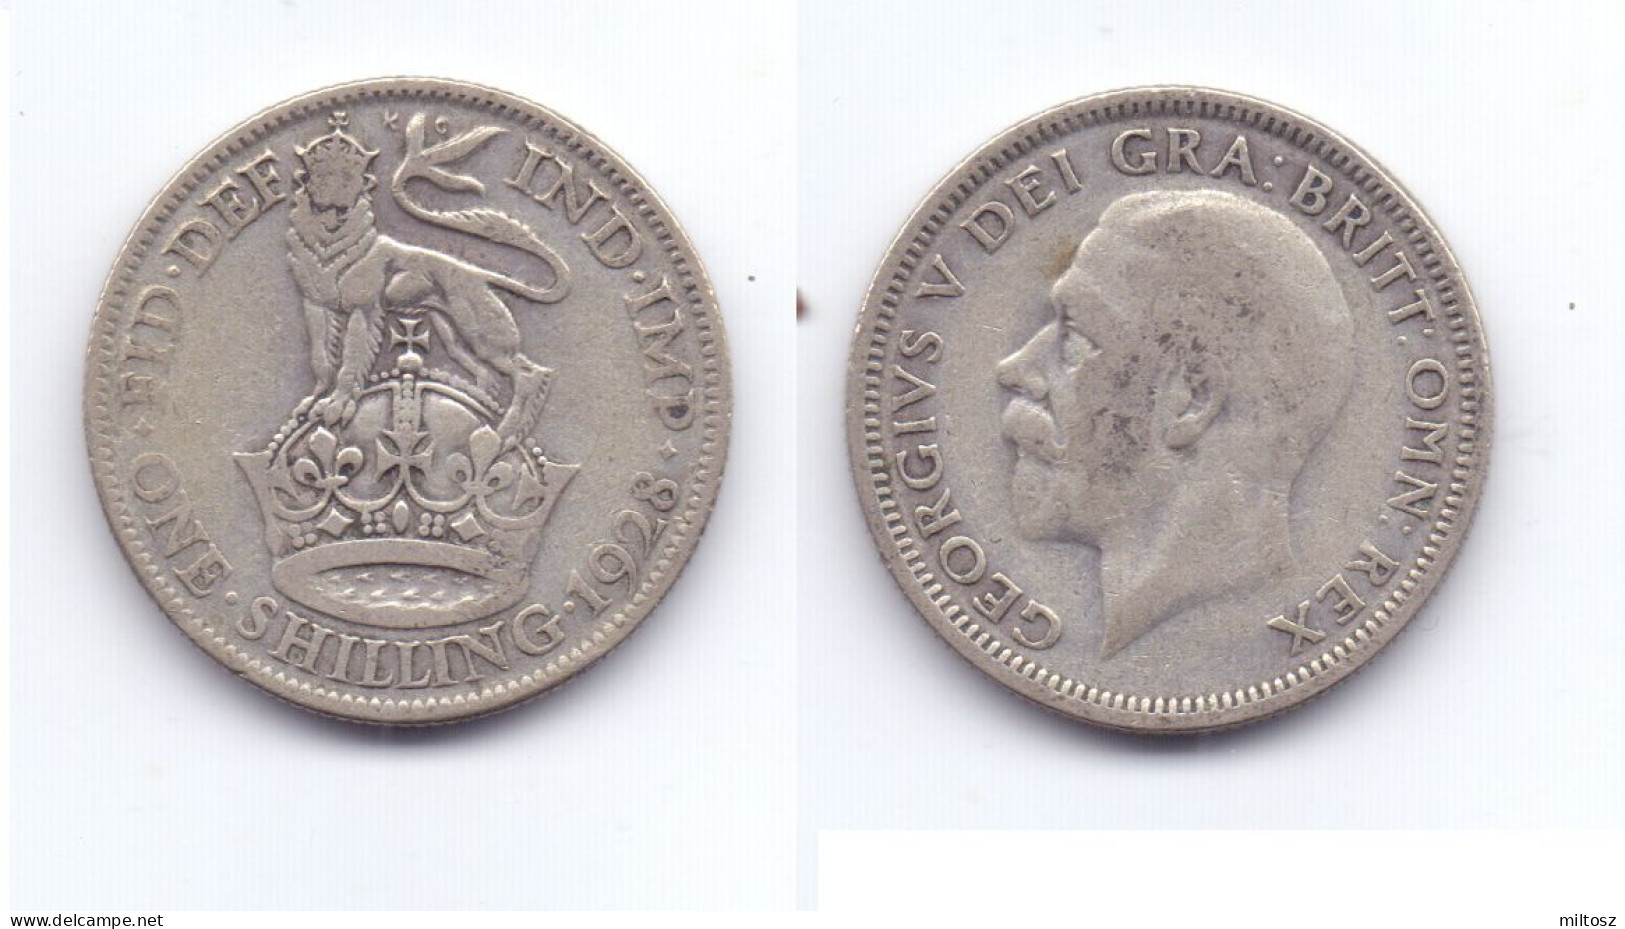 Great Britain 1 Shilling 1928 - I. 1 Shilling